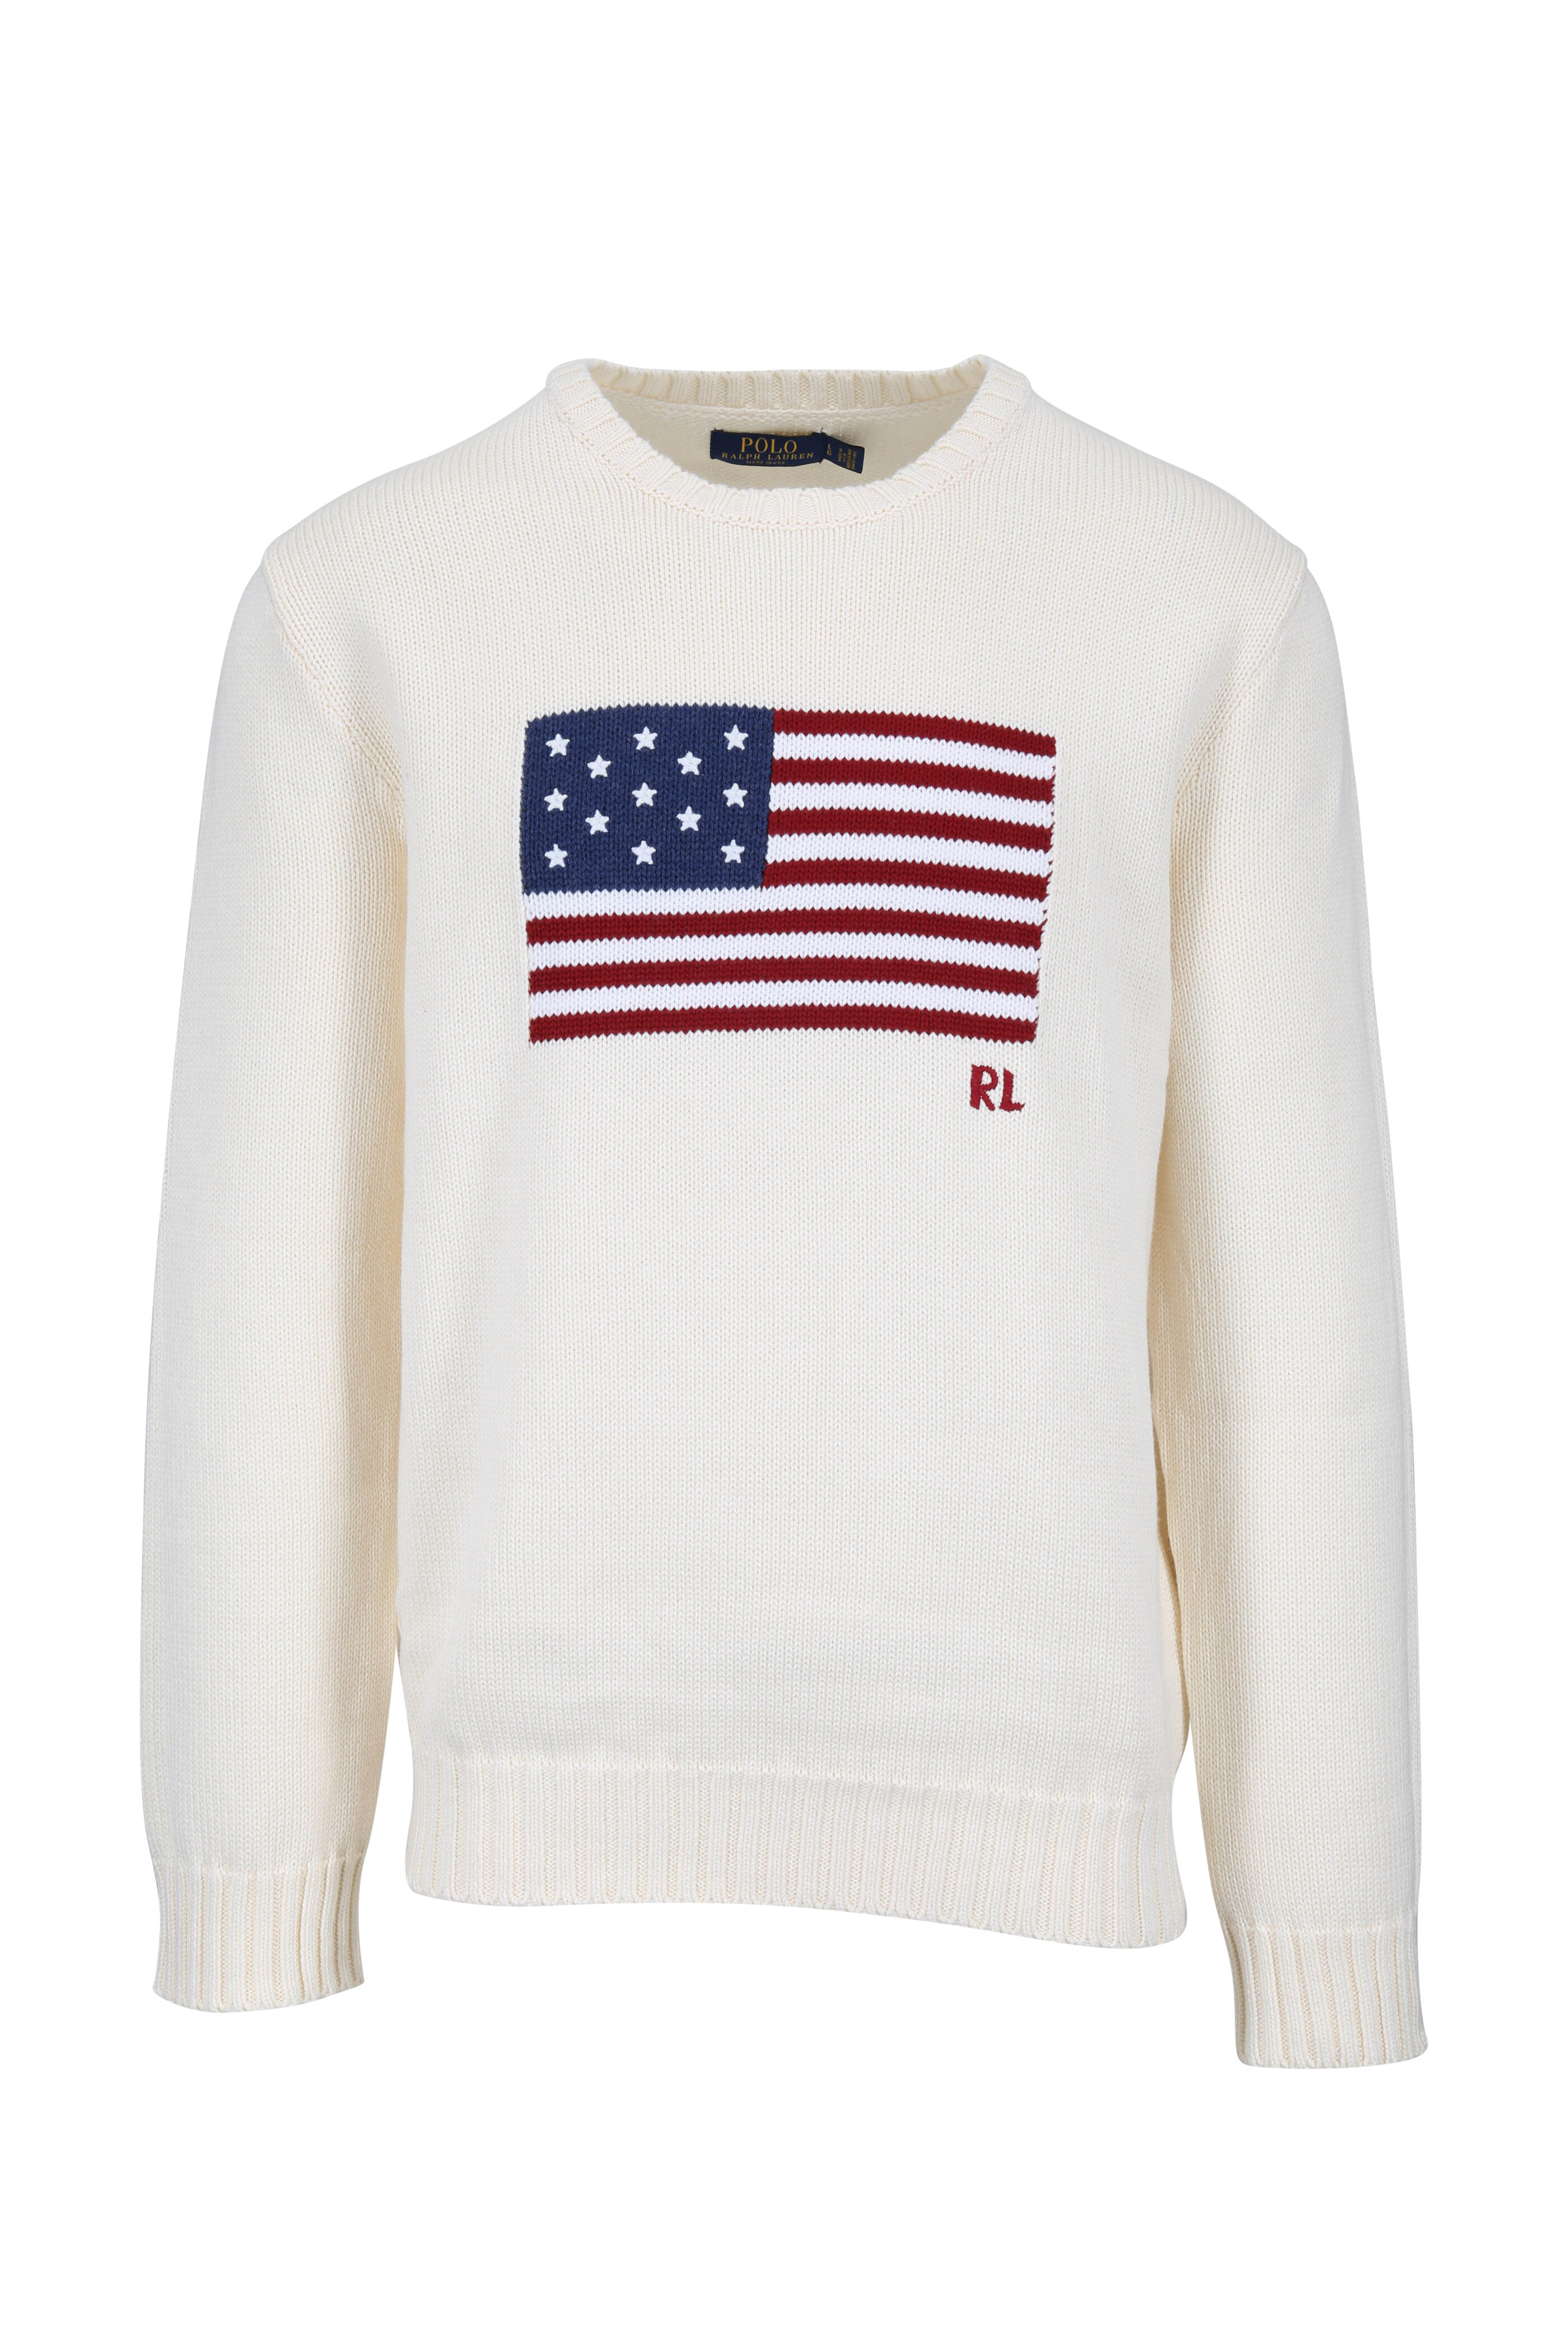 Polo Ralph Lauren - Cream American Flag Sweater